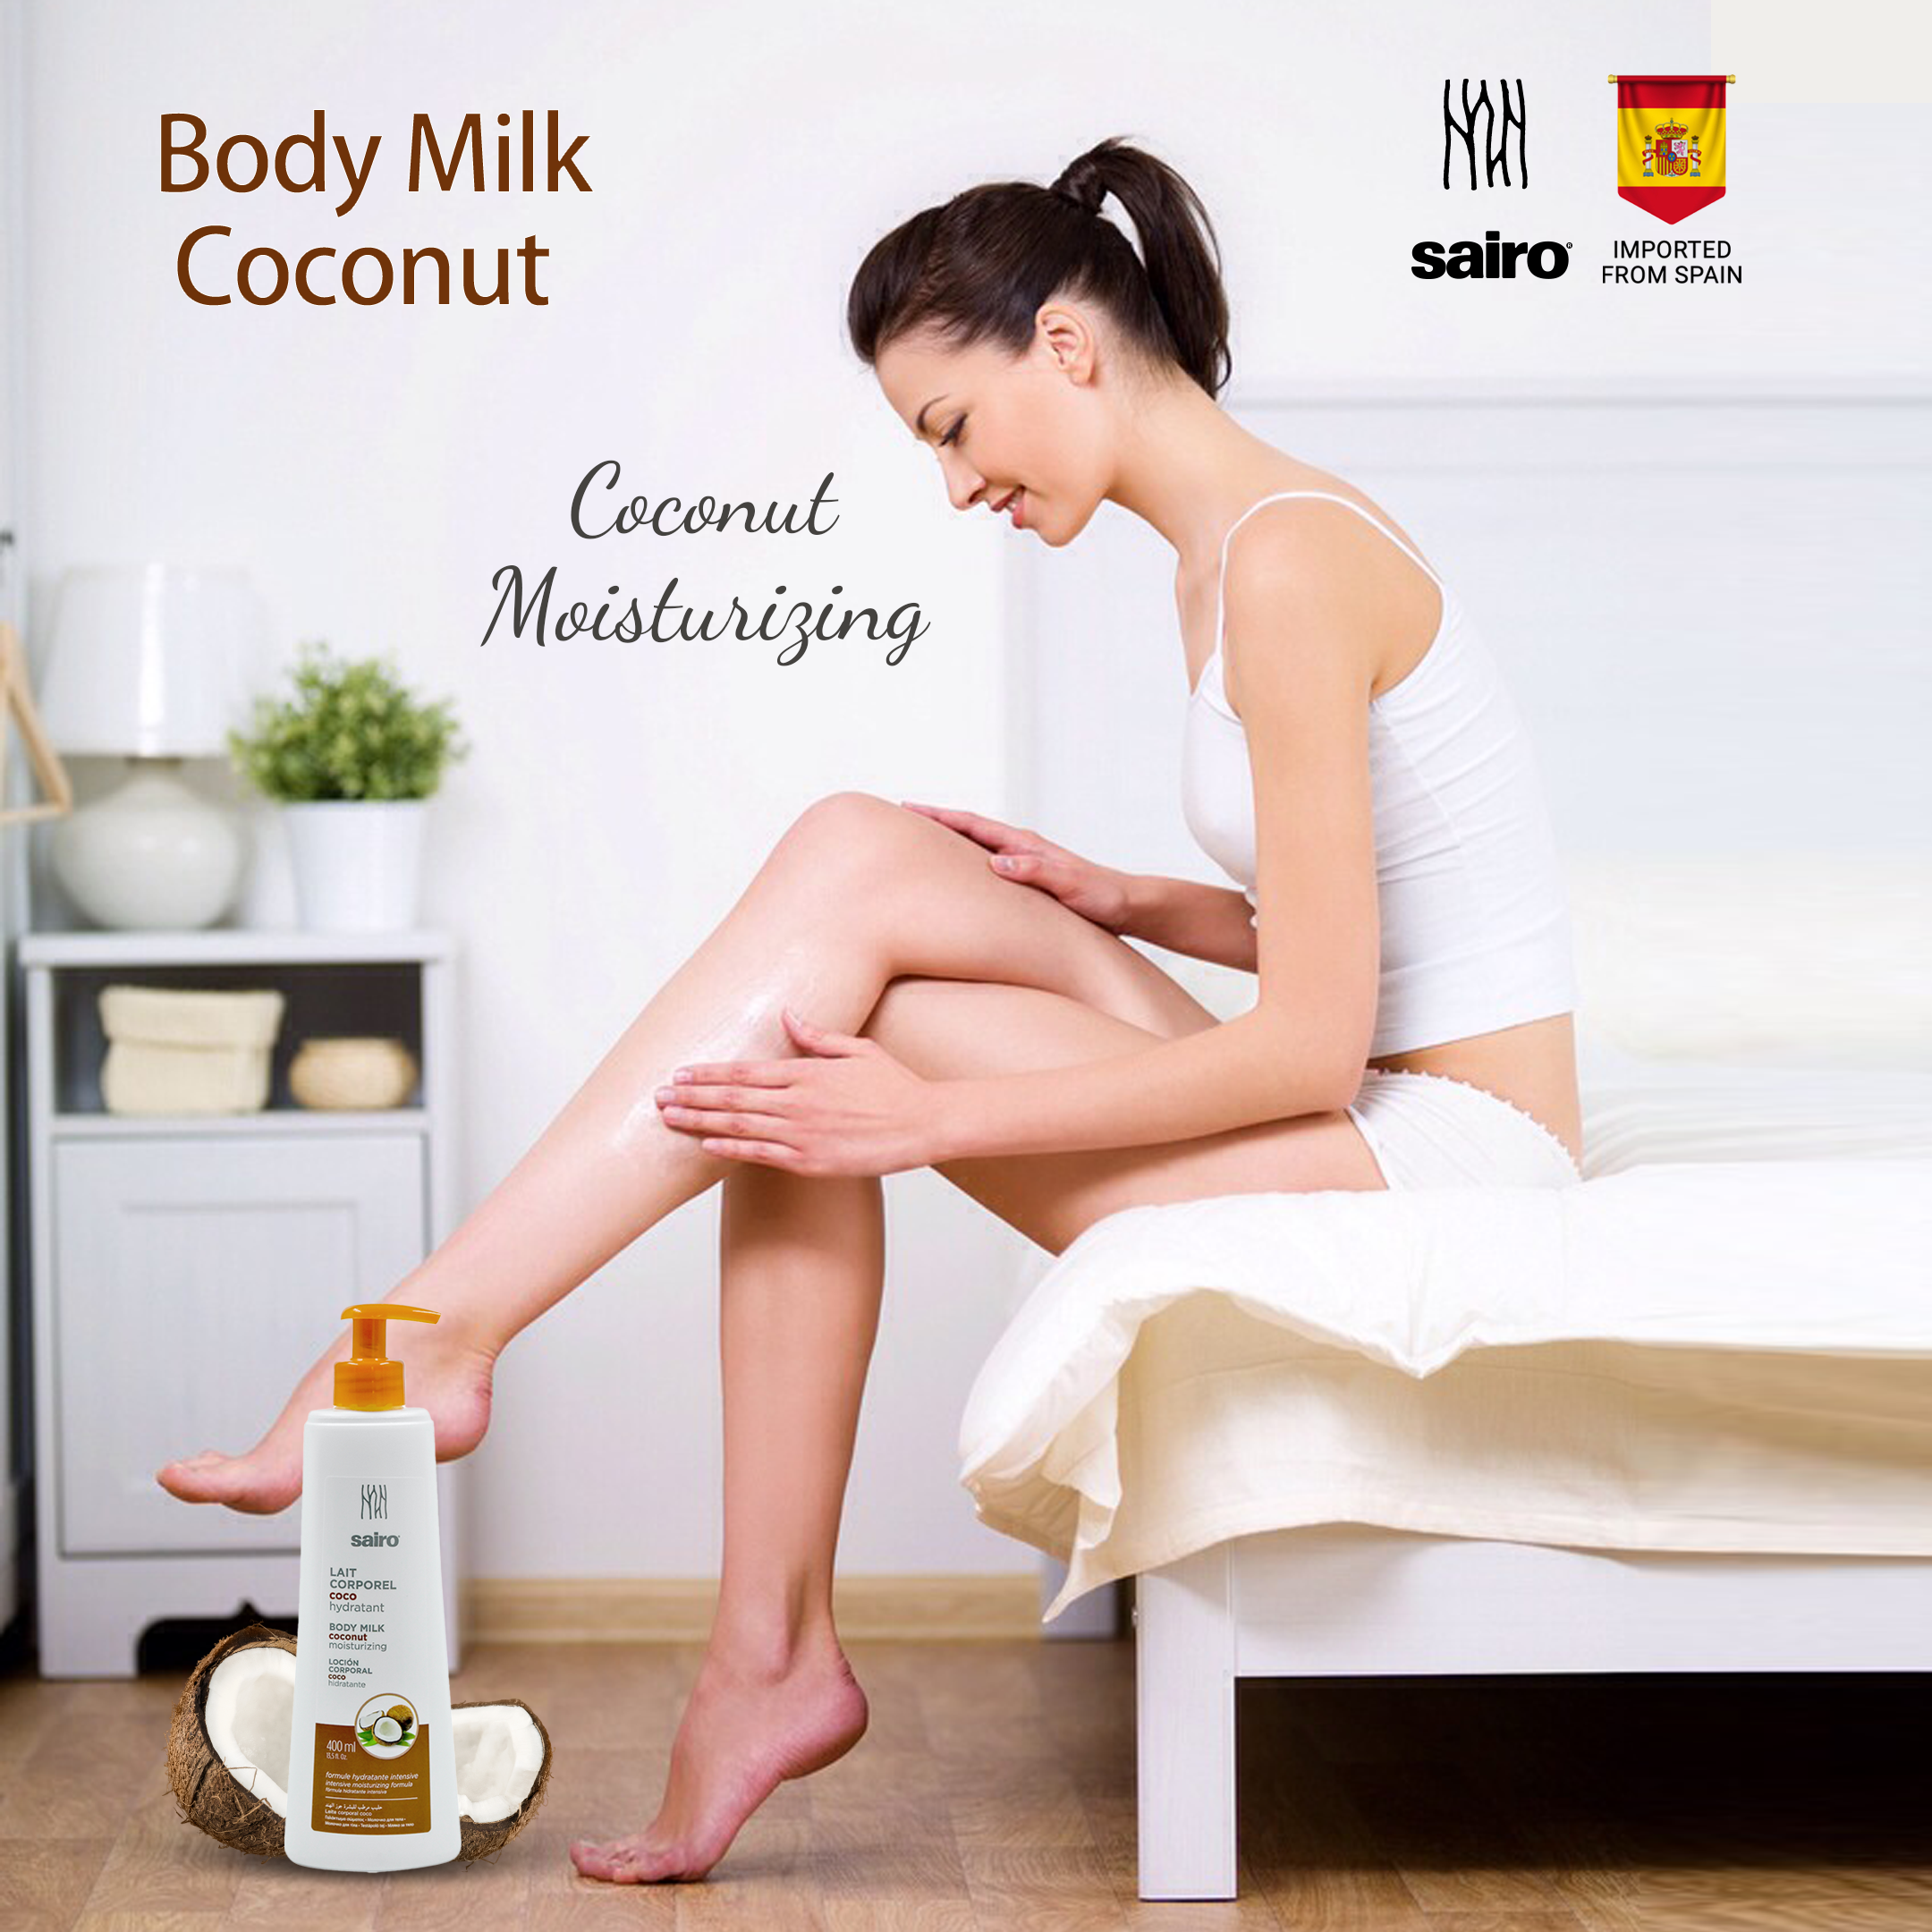 Coconut Moisturising Body Milk - Sairo